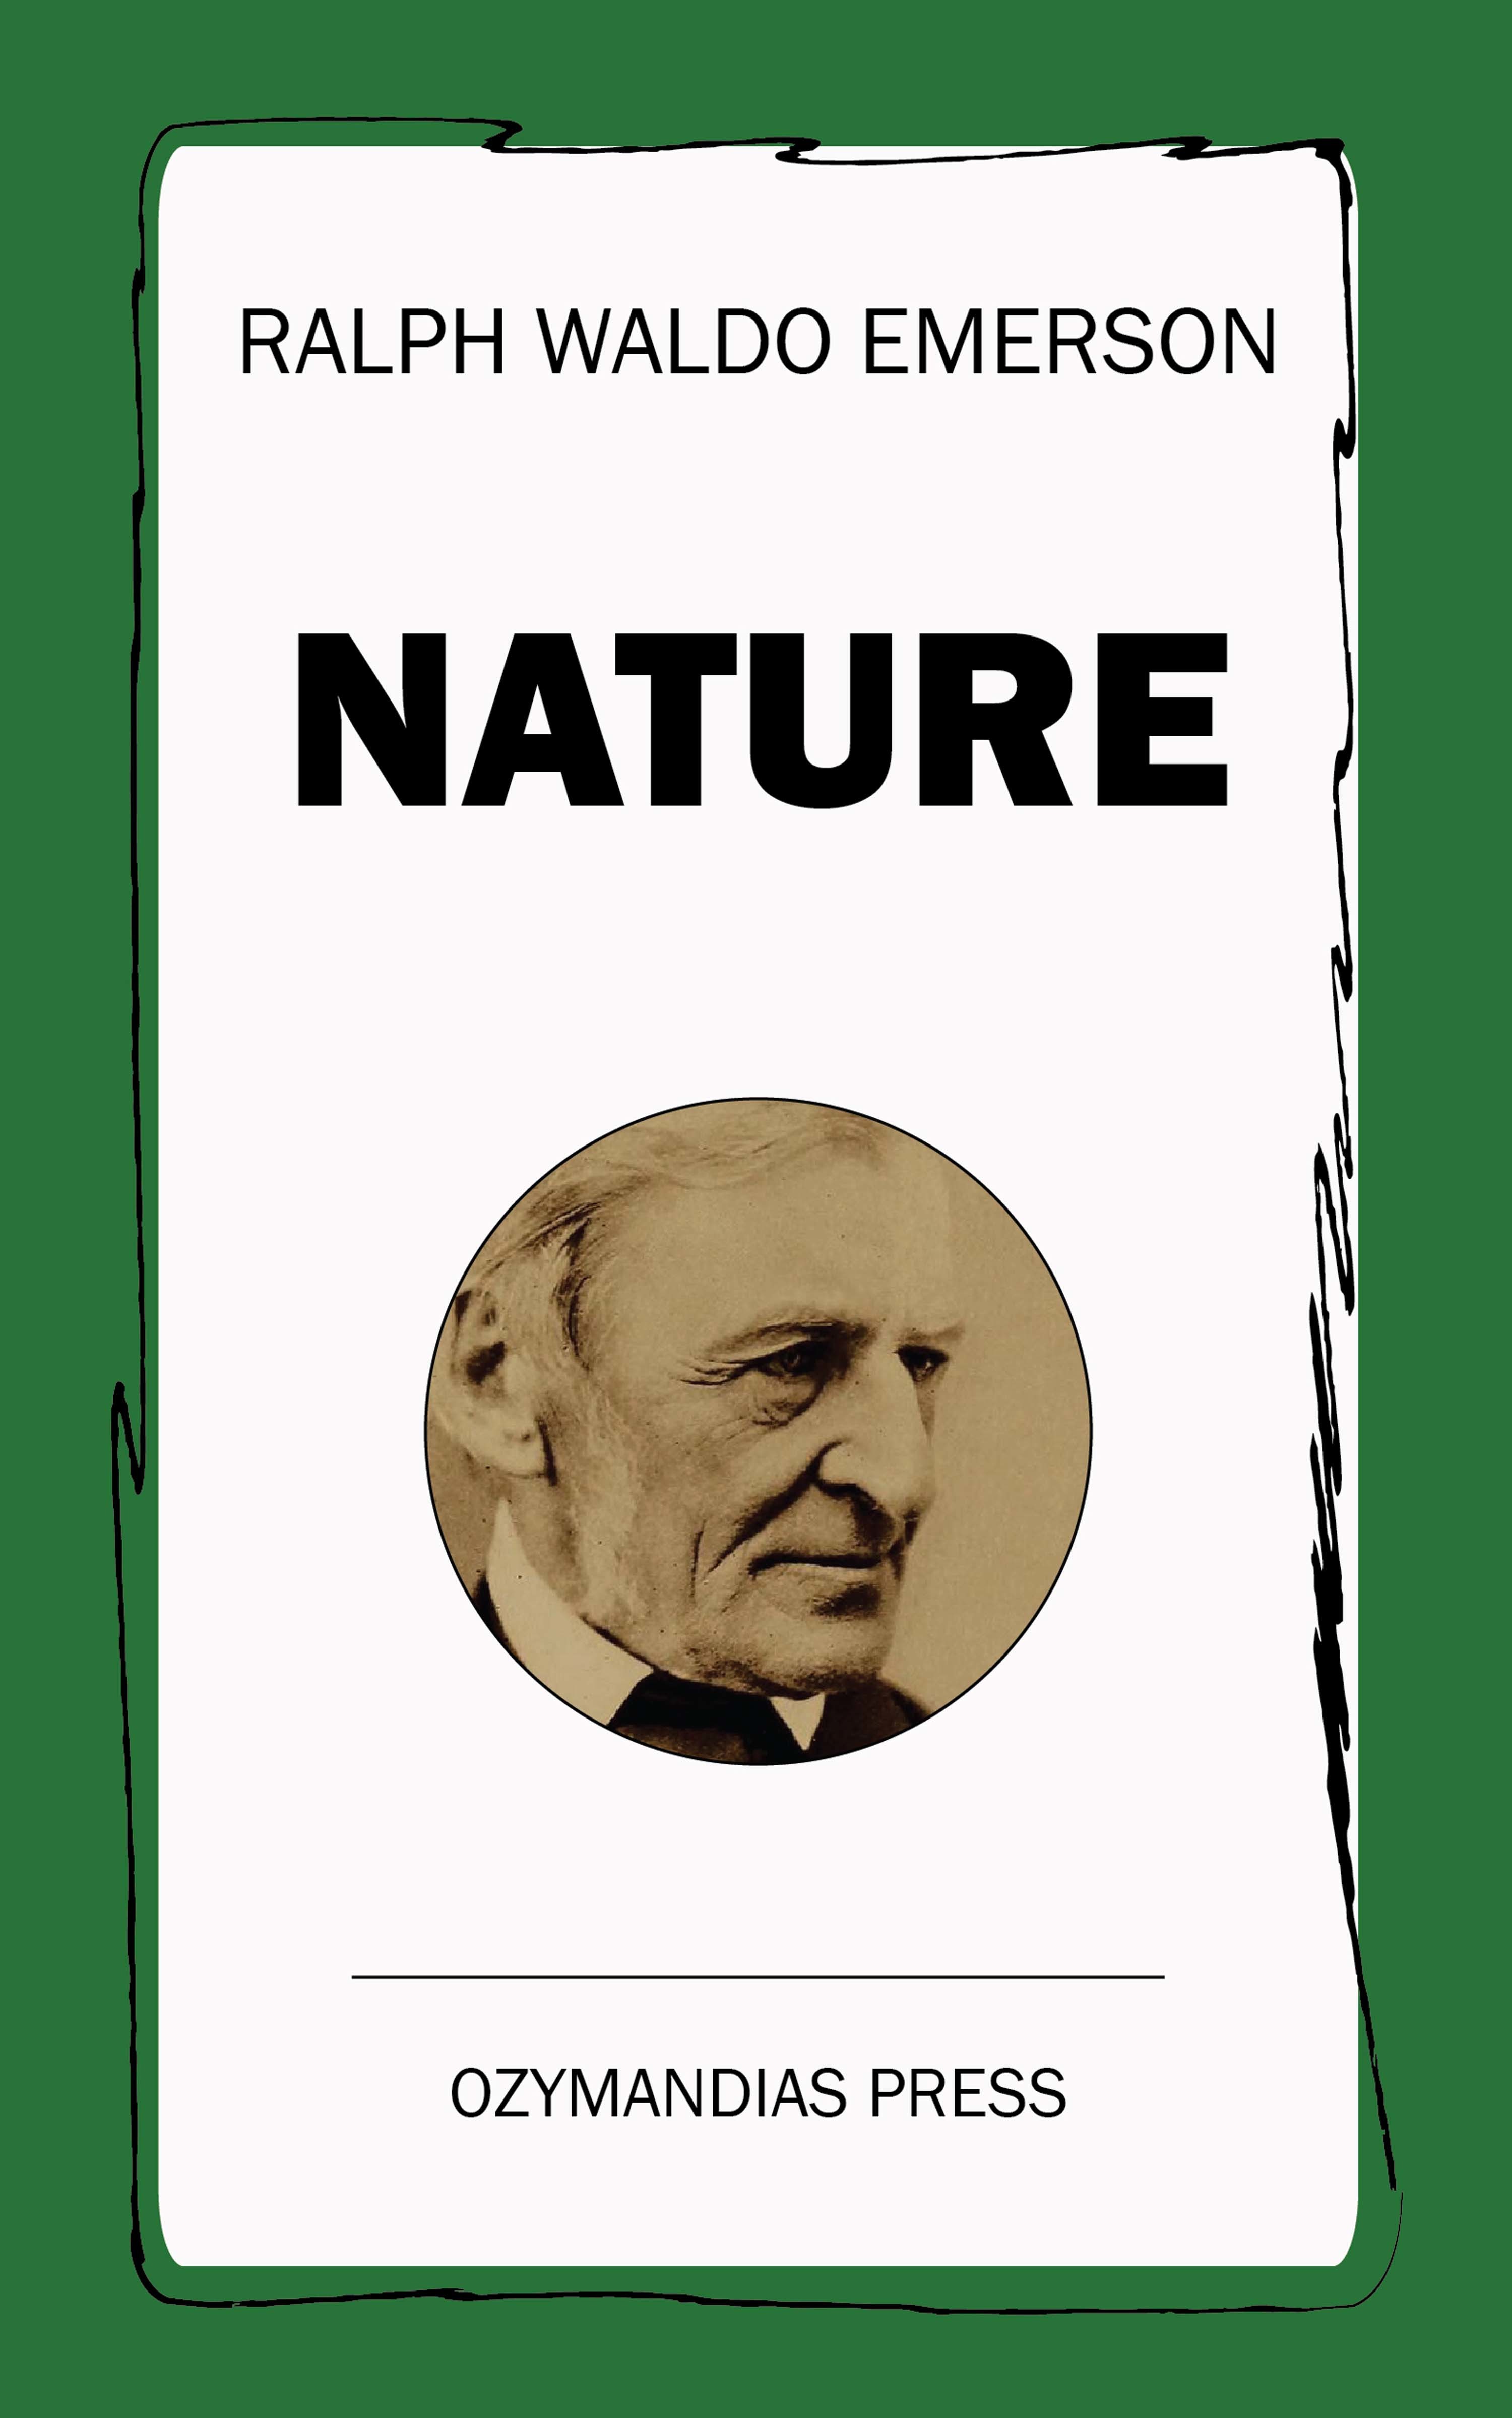 ralph waldo emerson essay on nature